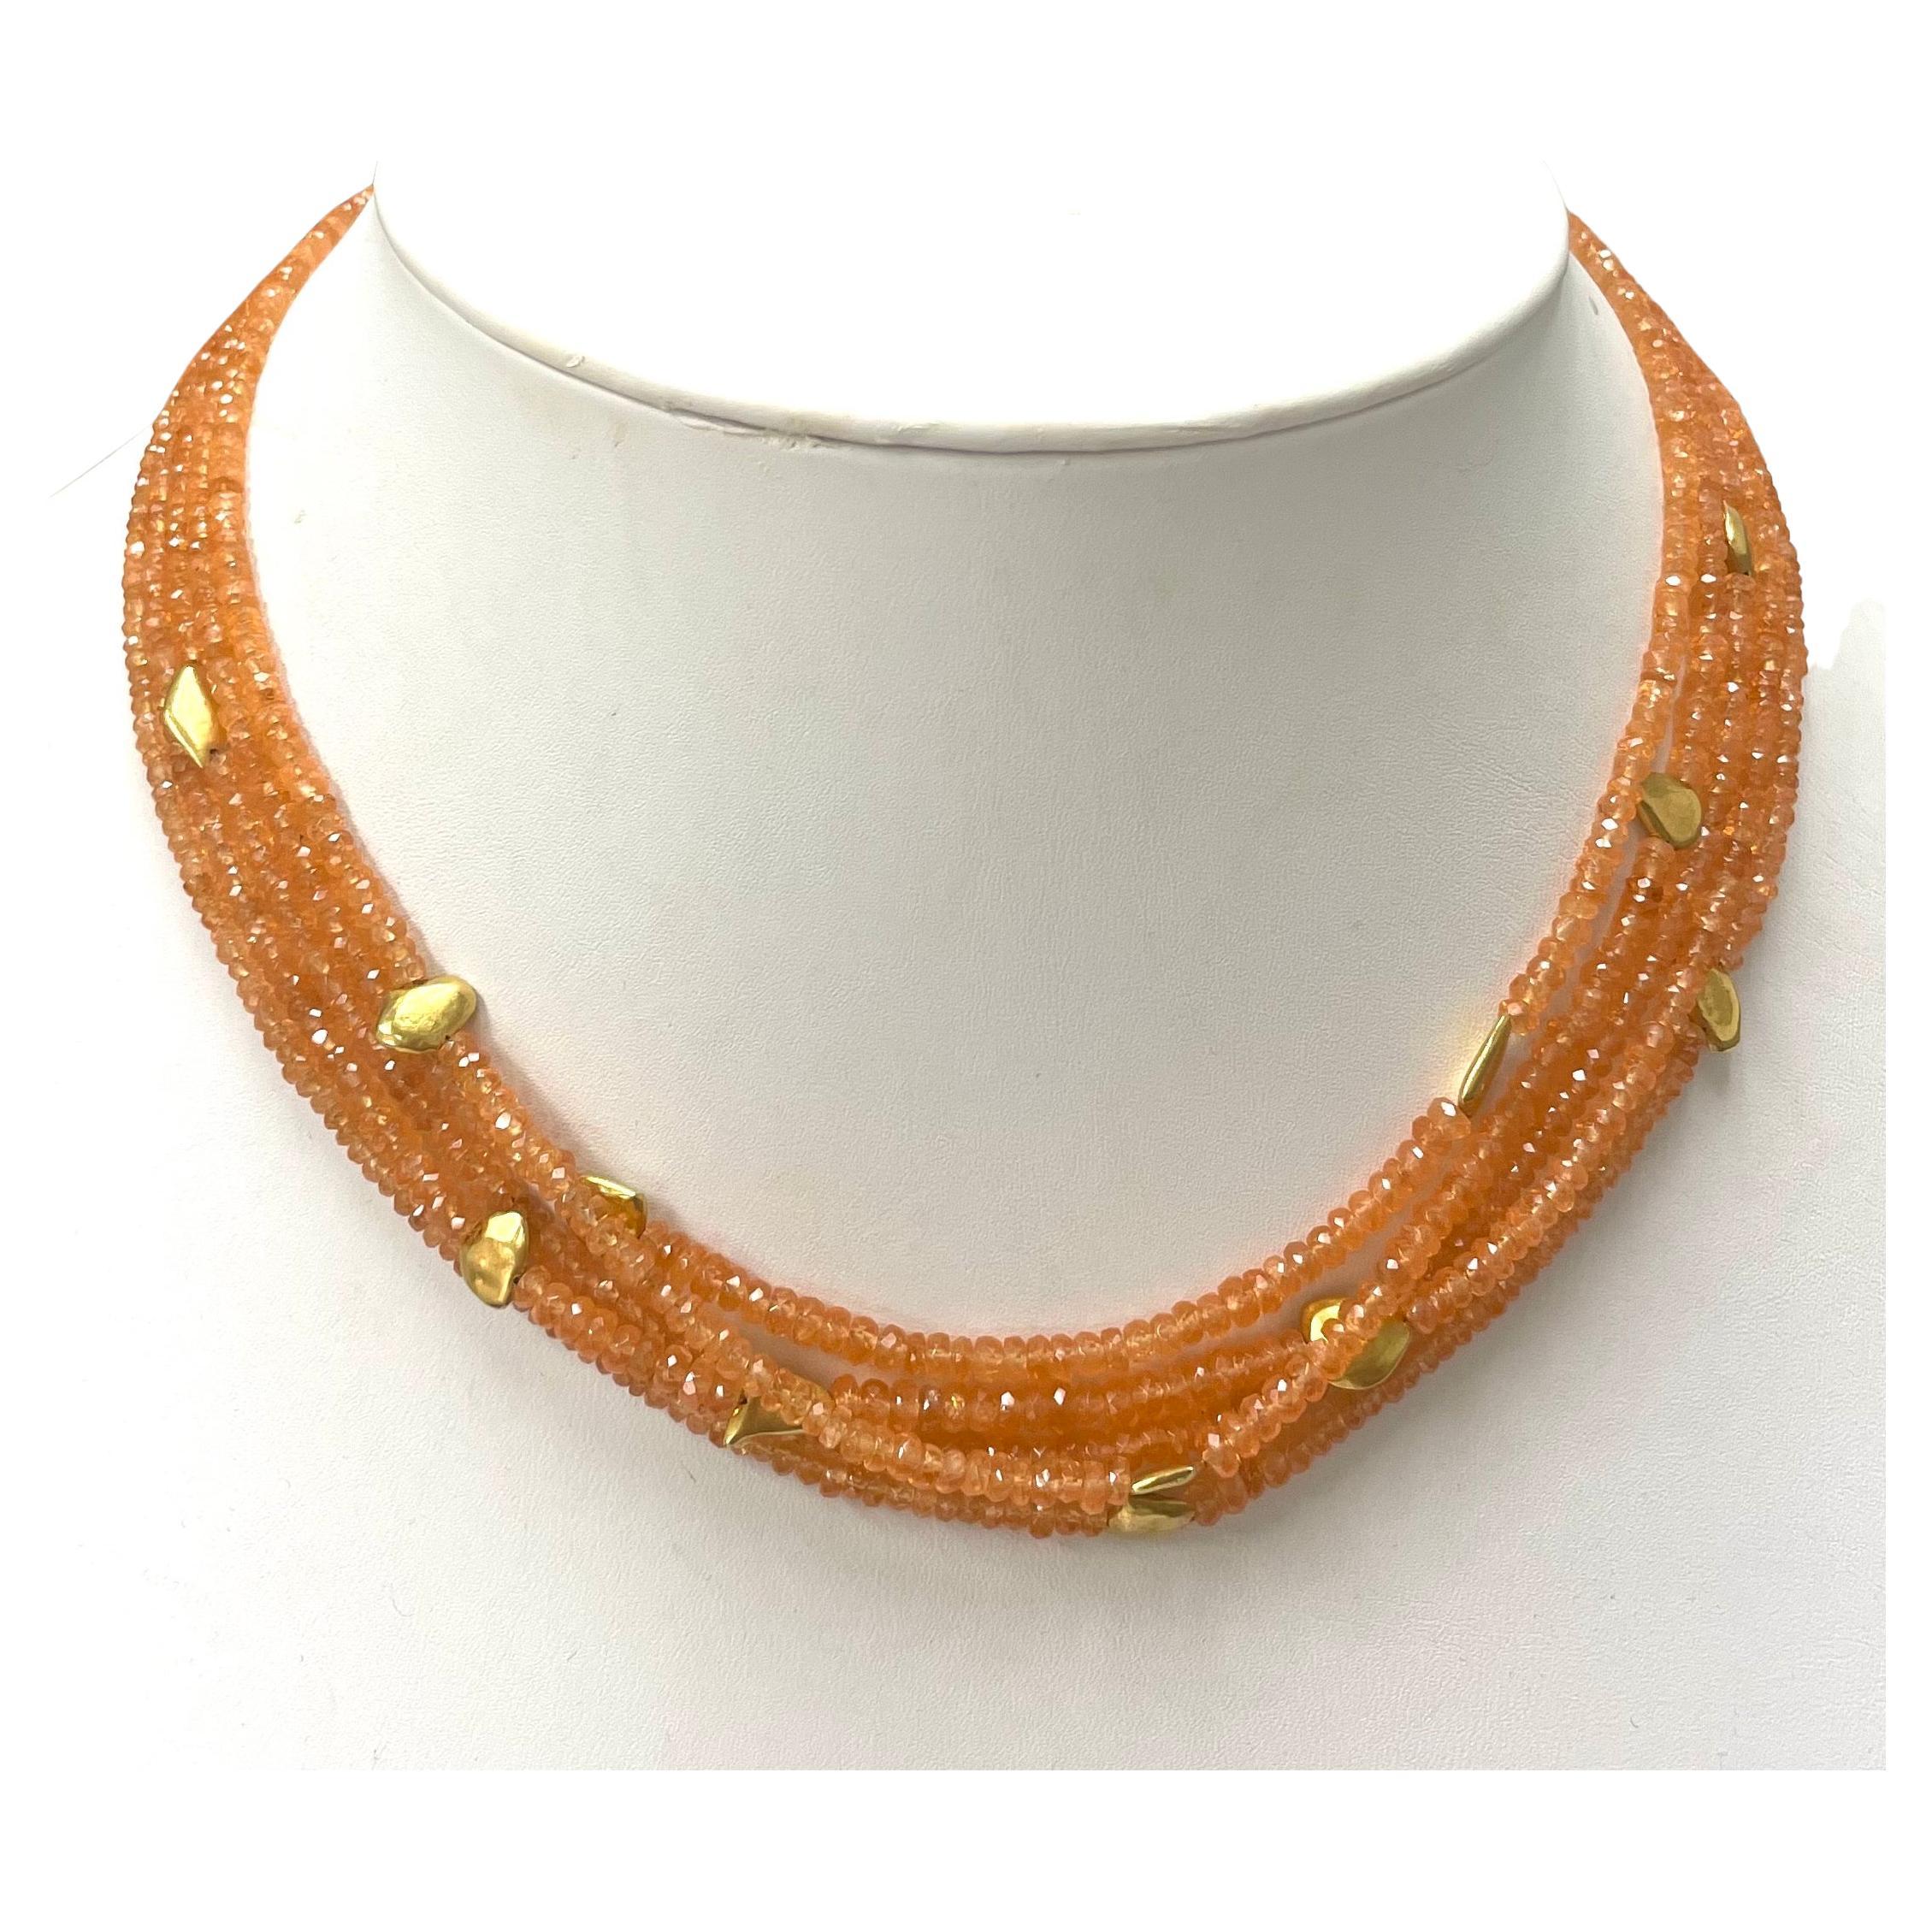  230 Carats Orange Spessartite Necklace with Gold Slices  For Sale 1